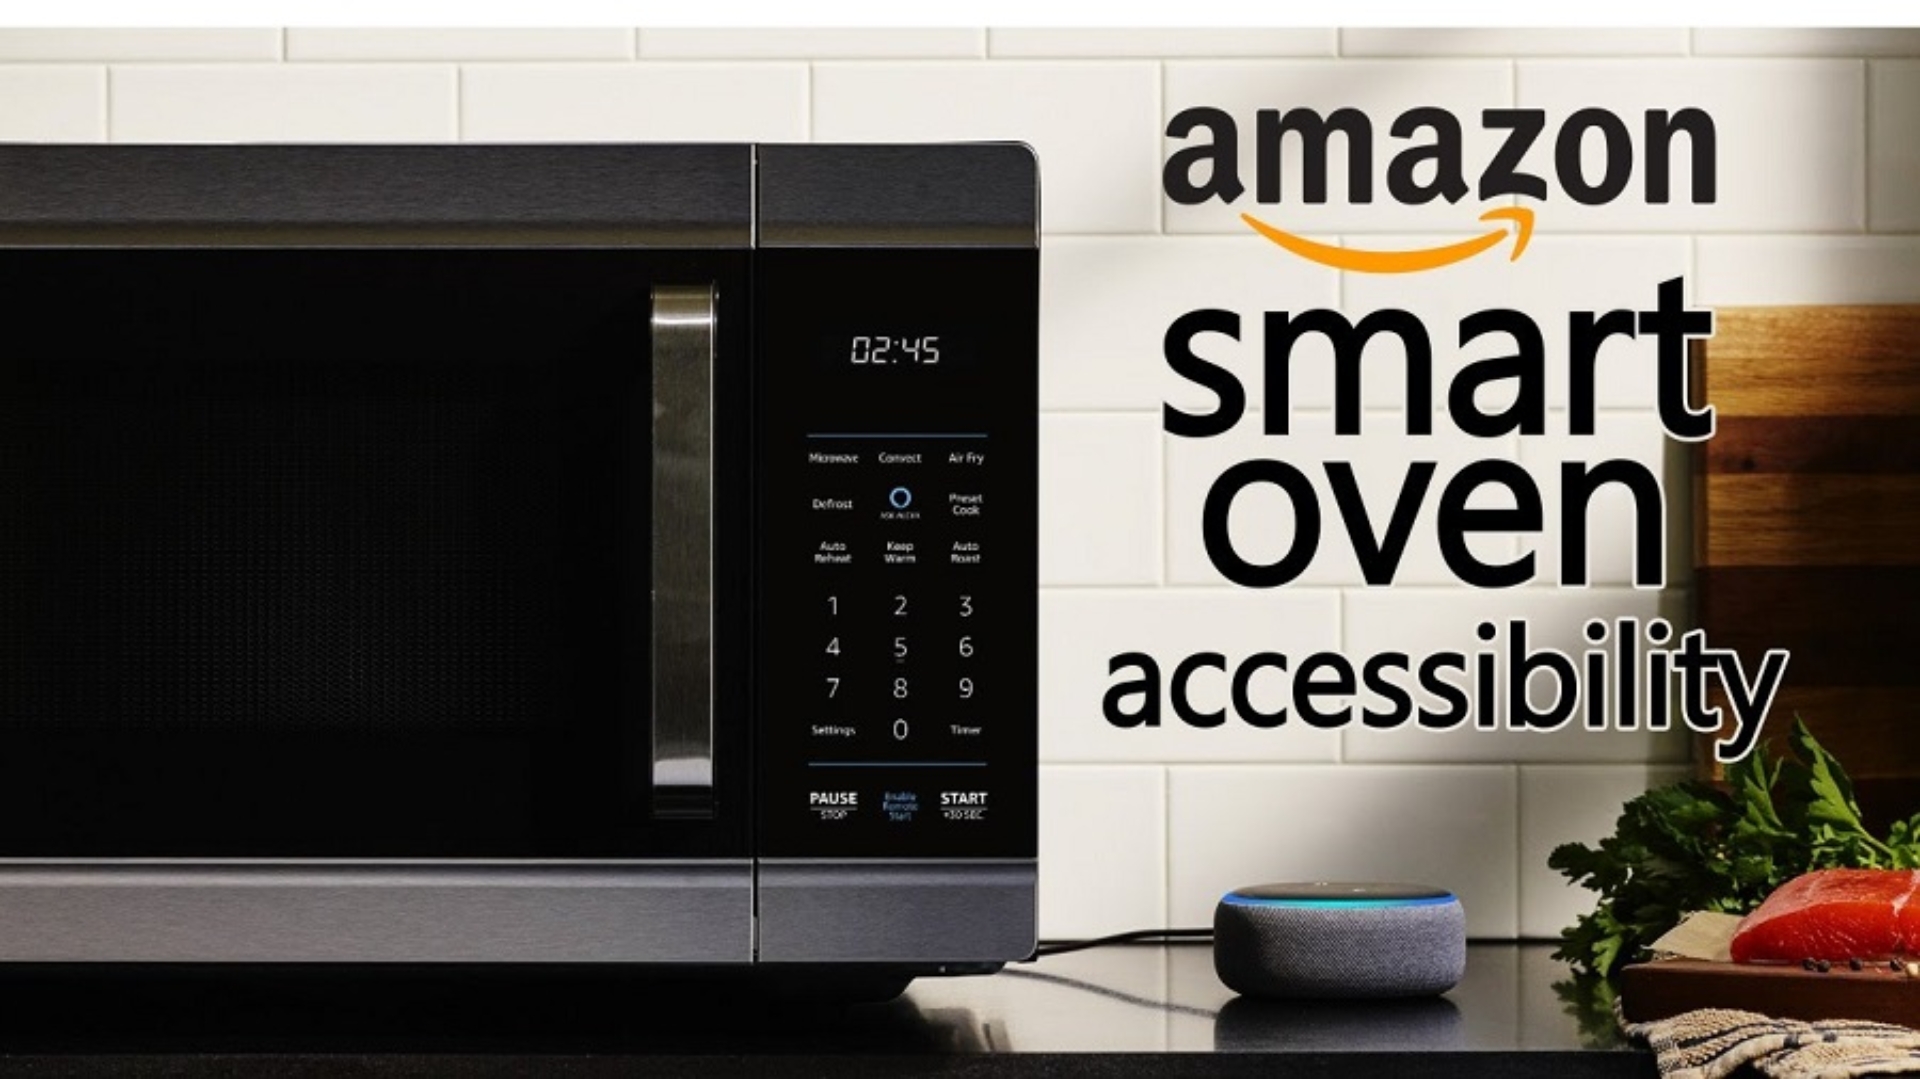 Amazon Smart Oven accessibility